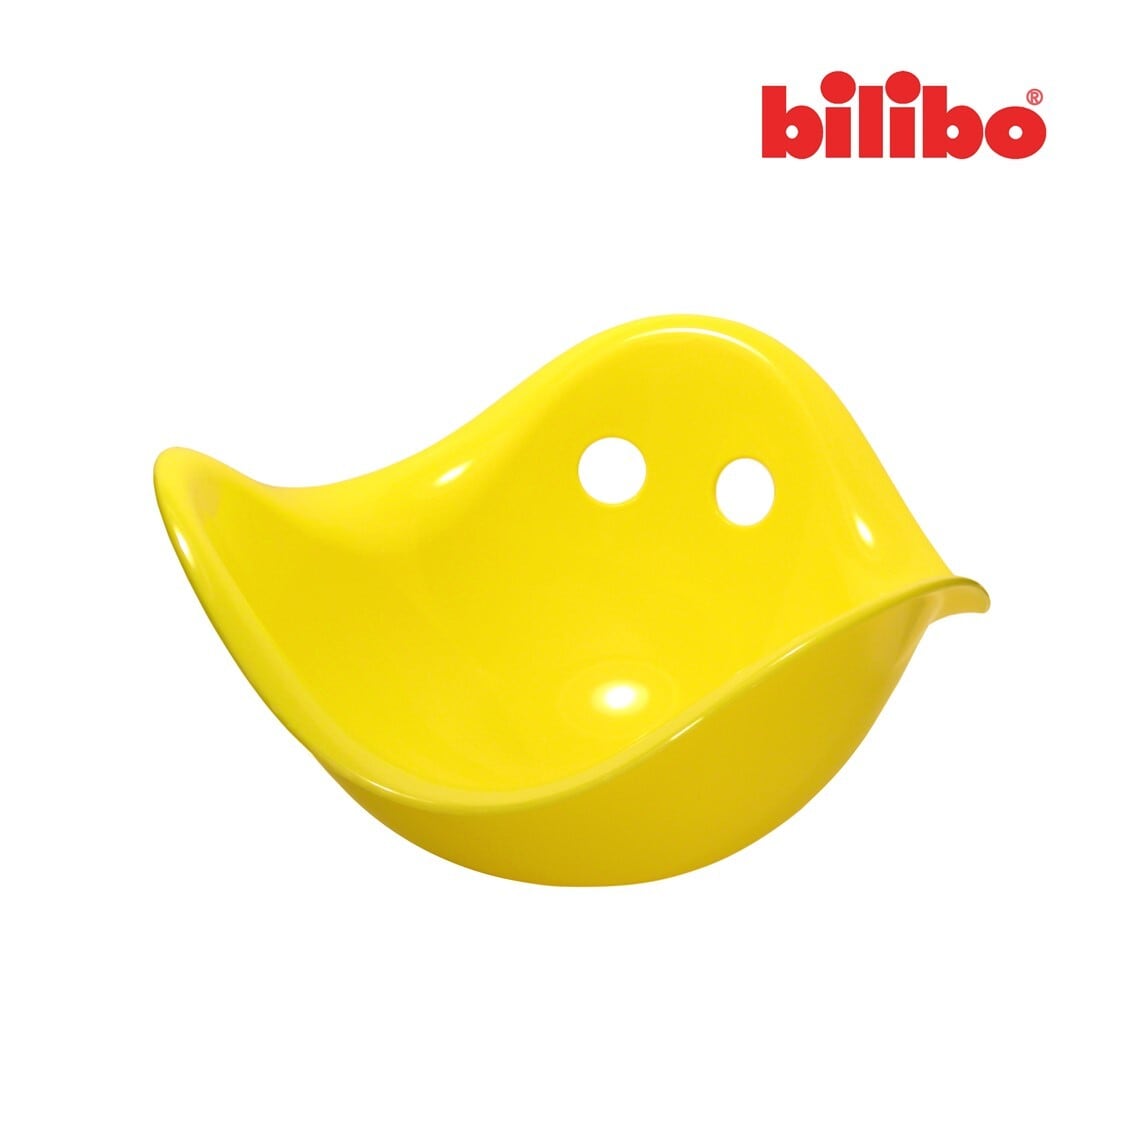 bilibo ビリボ 【elfa online shop】世界中から集めたベビー用品・おもちゃ 公式通販 エルファショップ